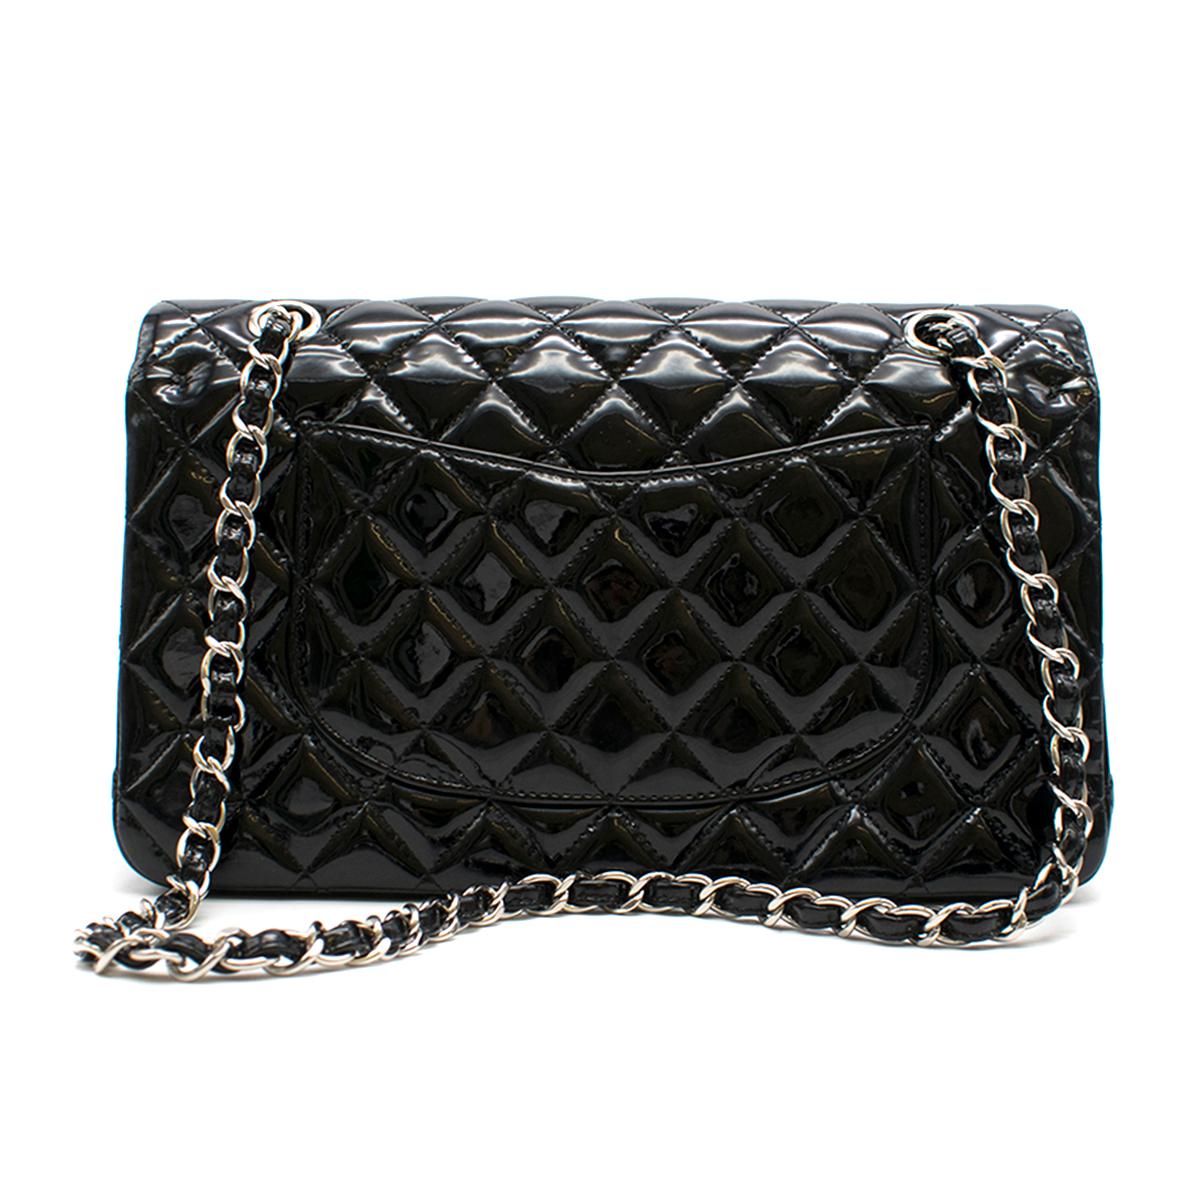 Women's Chanel Black Patent Leather Double Flap Classic Handbag 